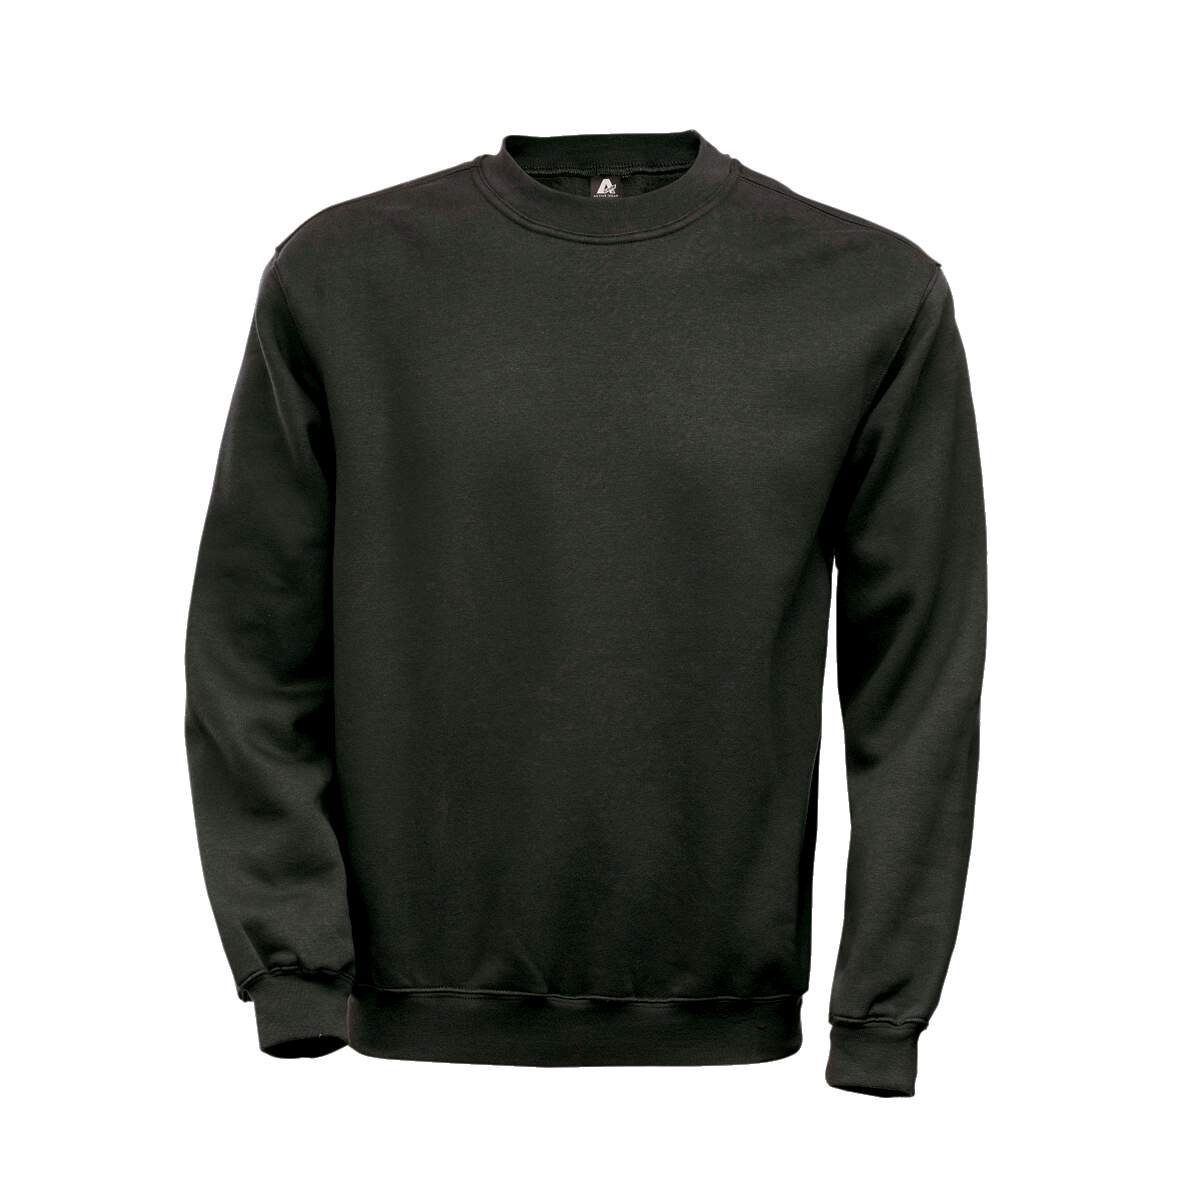 1181289 - Sweatshirt schwarz 100225